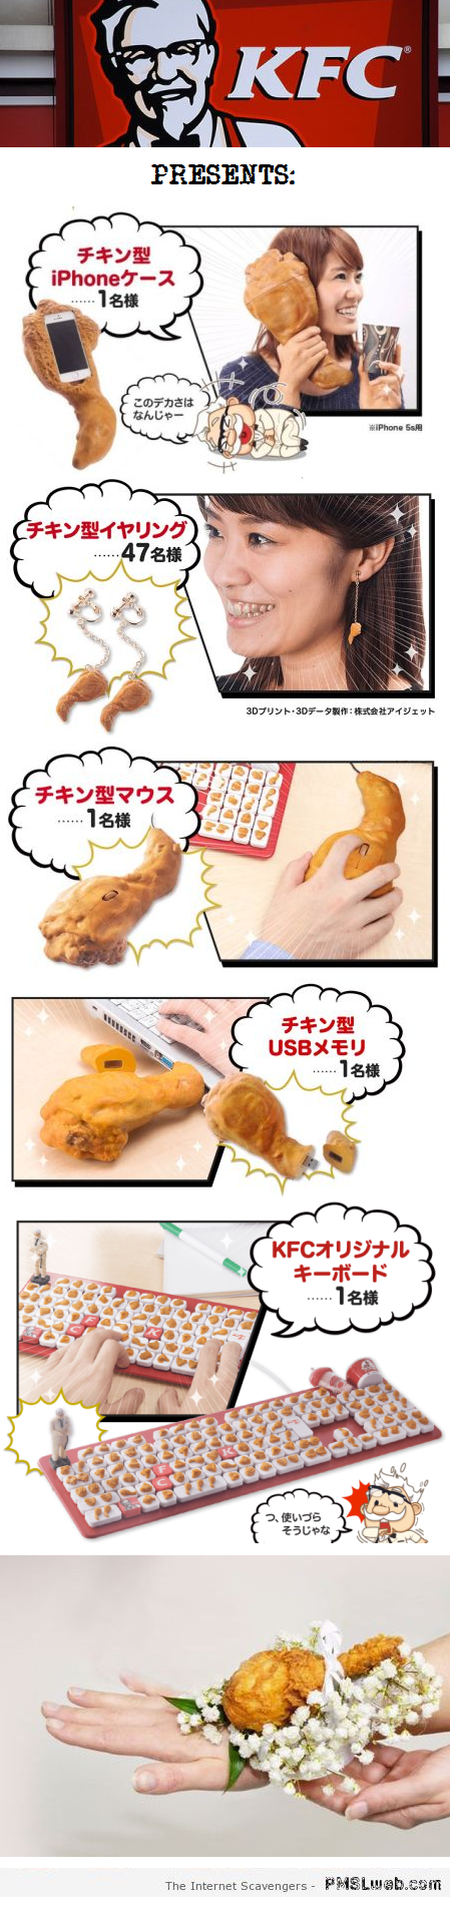 Funny KFC gadgets at PMSLweb.com